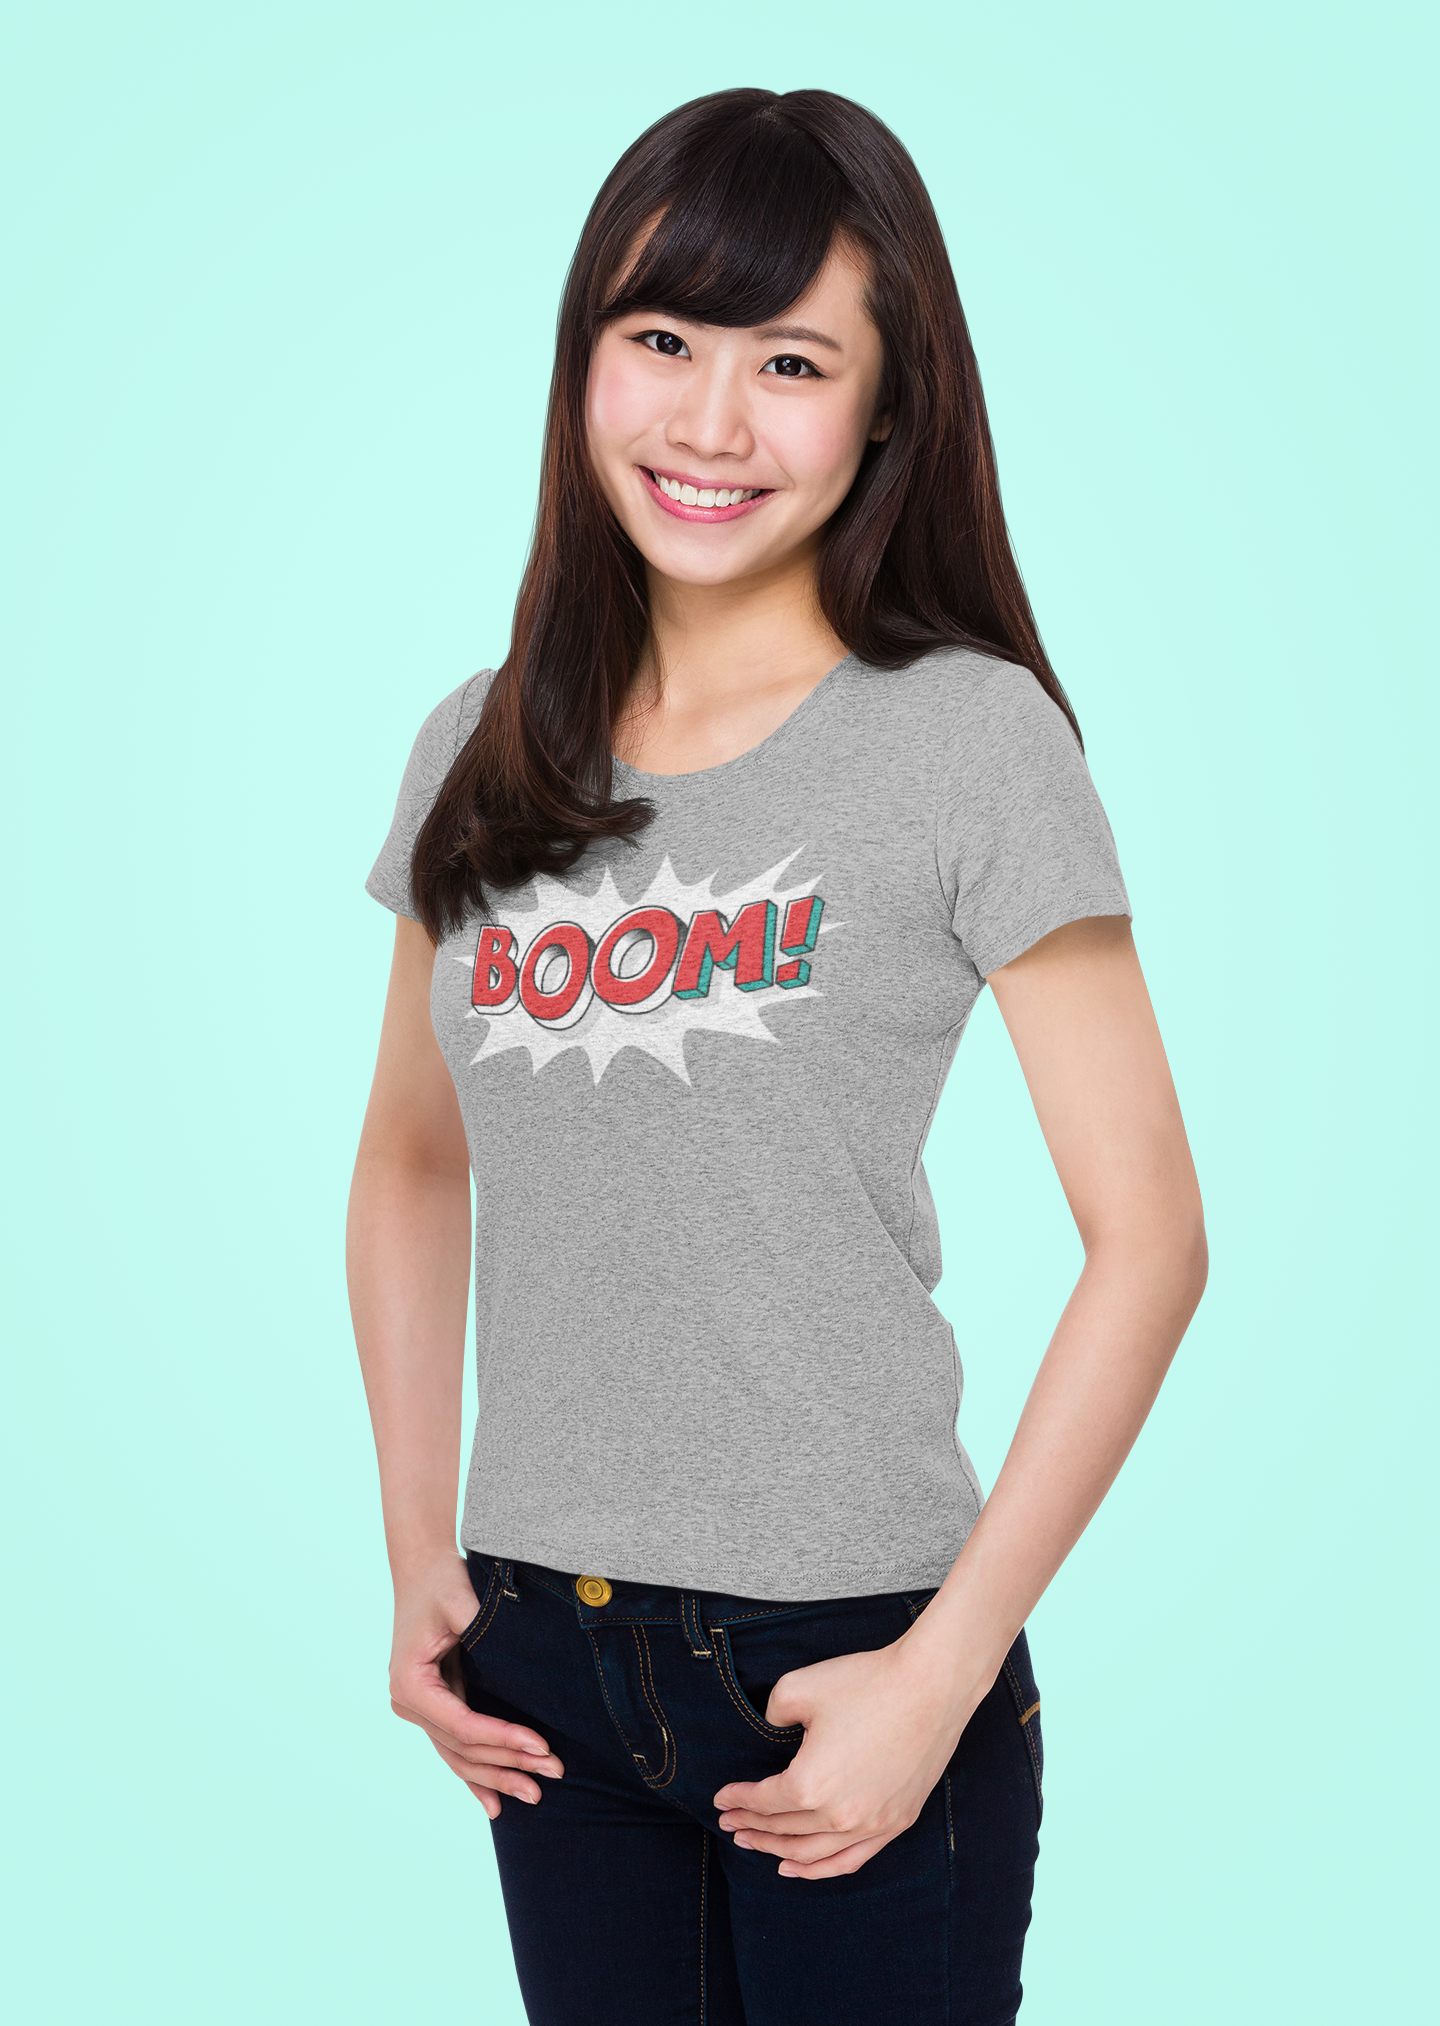 BOOM! Awesomeness Women’s organic t-shirt